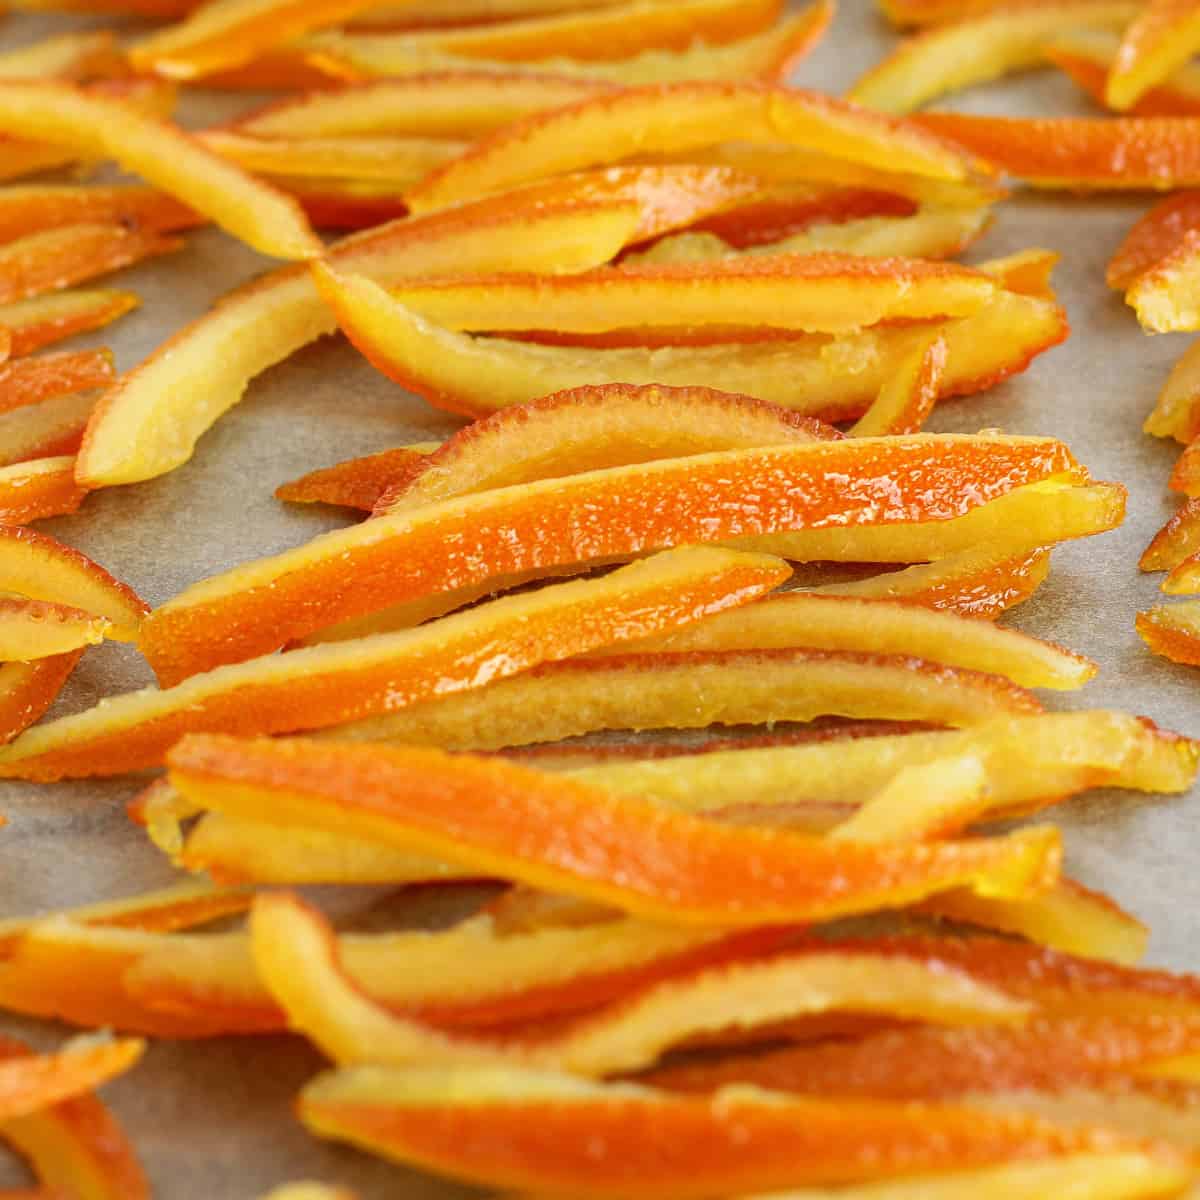 orange peels feature